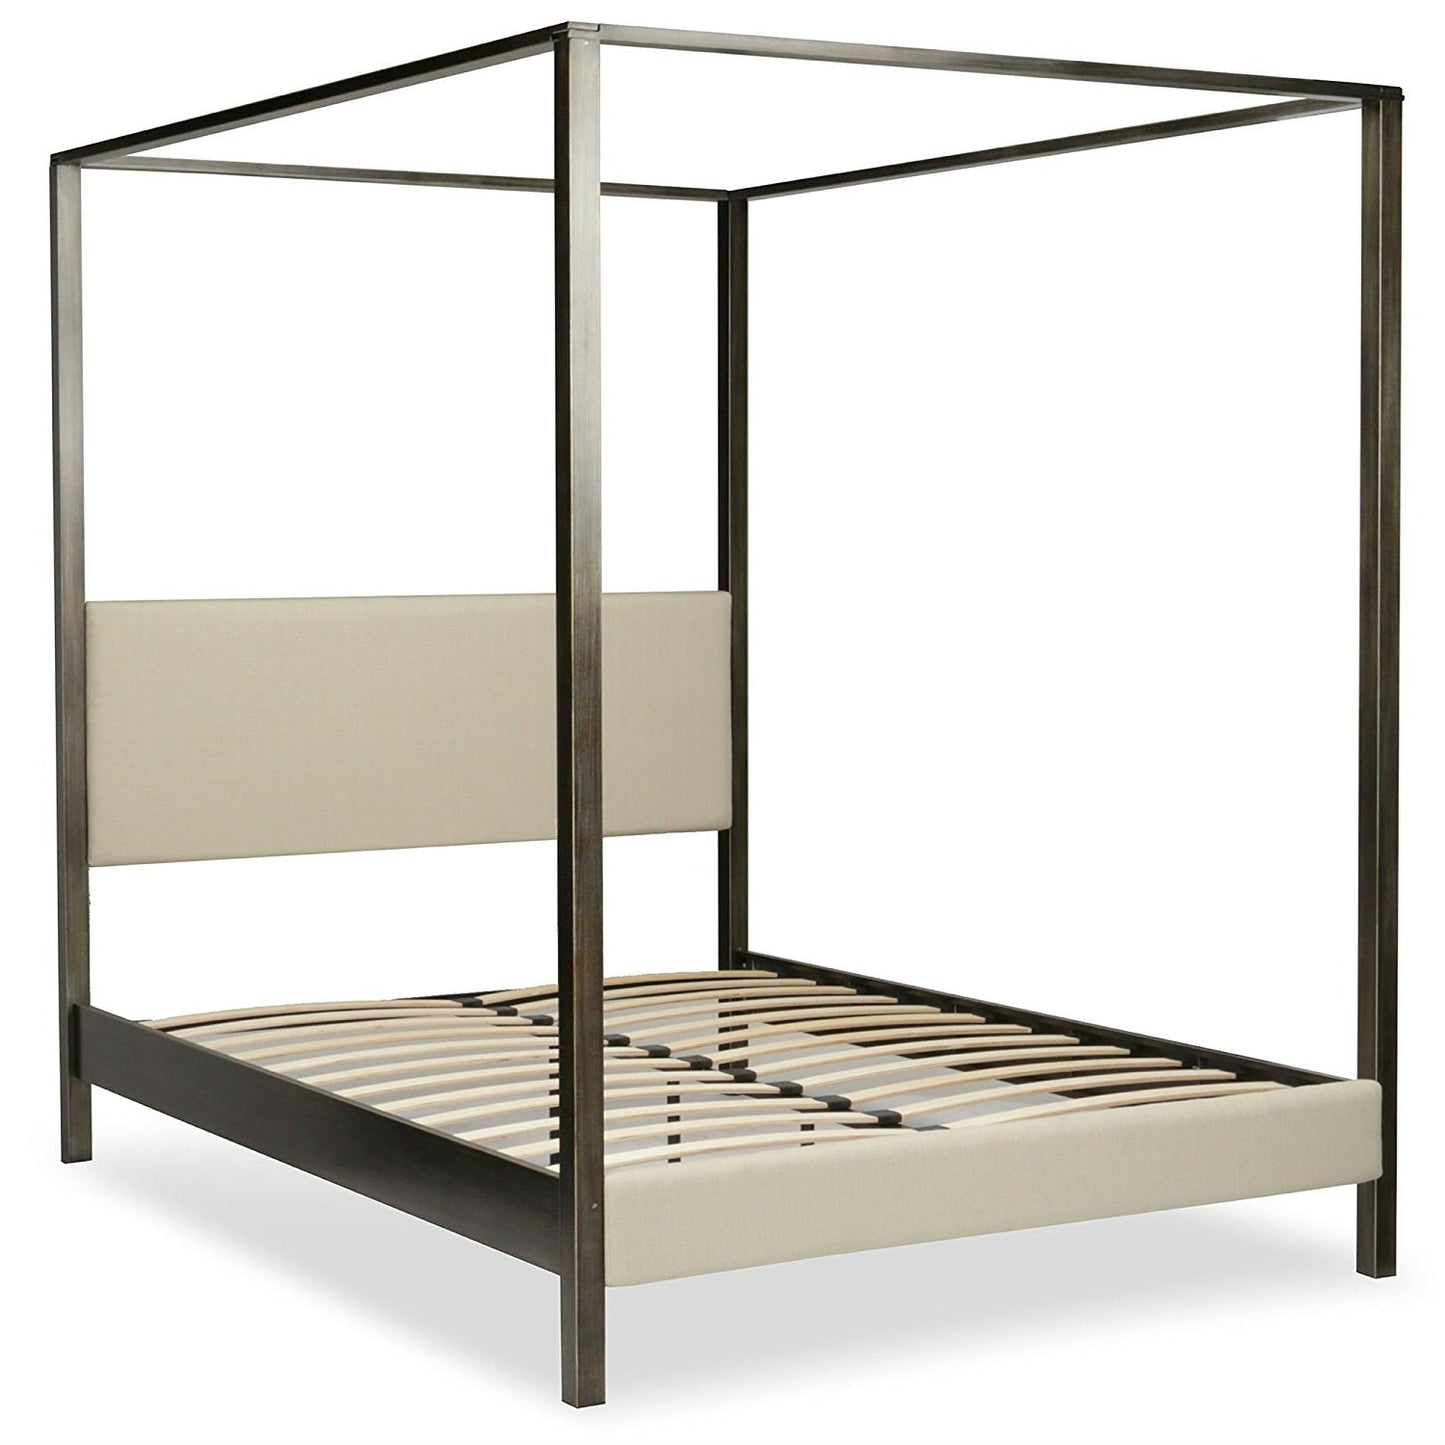 Bedroom > Bed Frames > Canopy Beds - King Size Upholstered Canopy Bed Frame With Wood Slats In Platinum Slate Finish